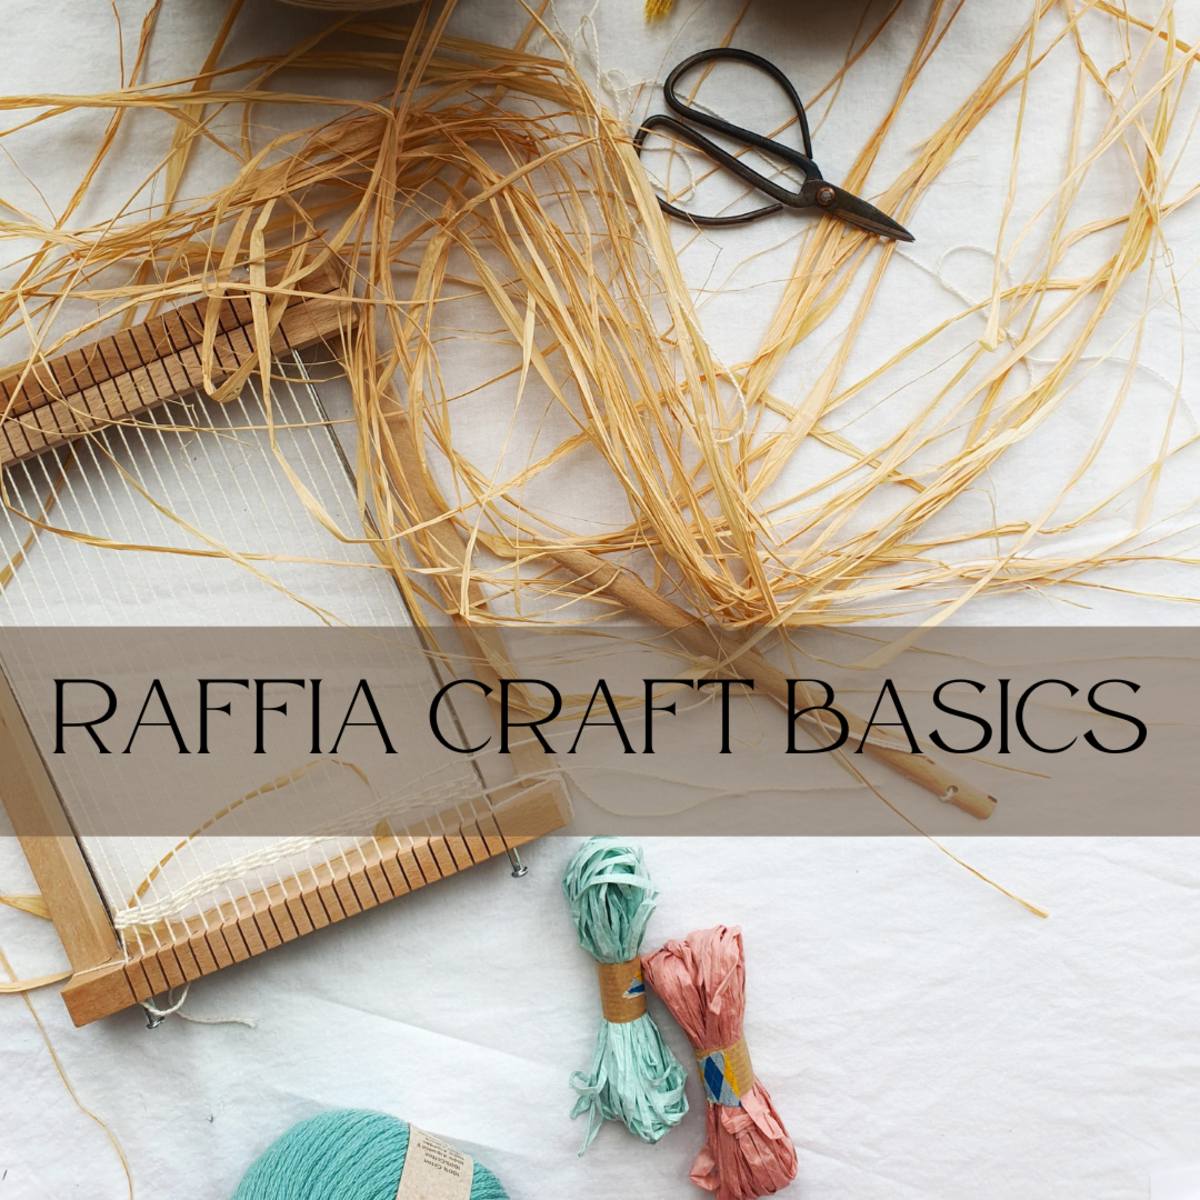 Raffia Craft Basics: How to Make a Simple Mat & Flowers